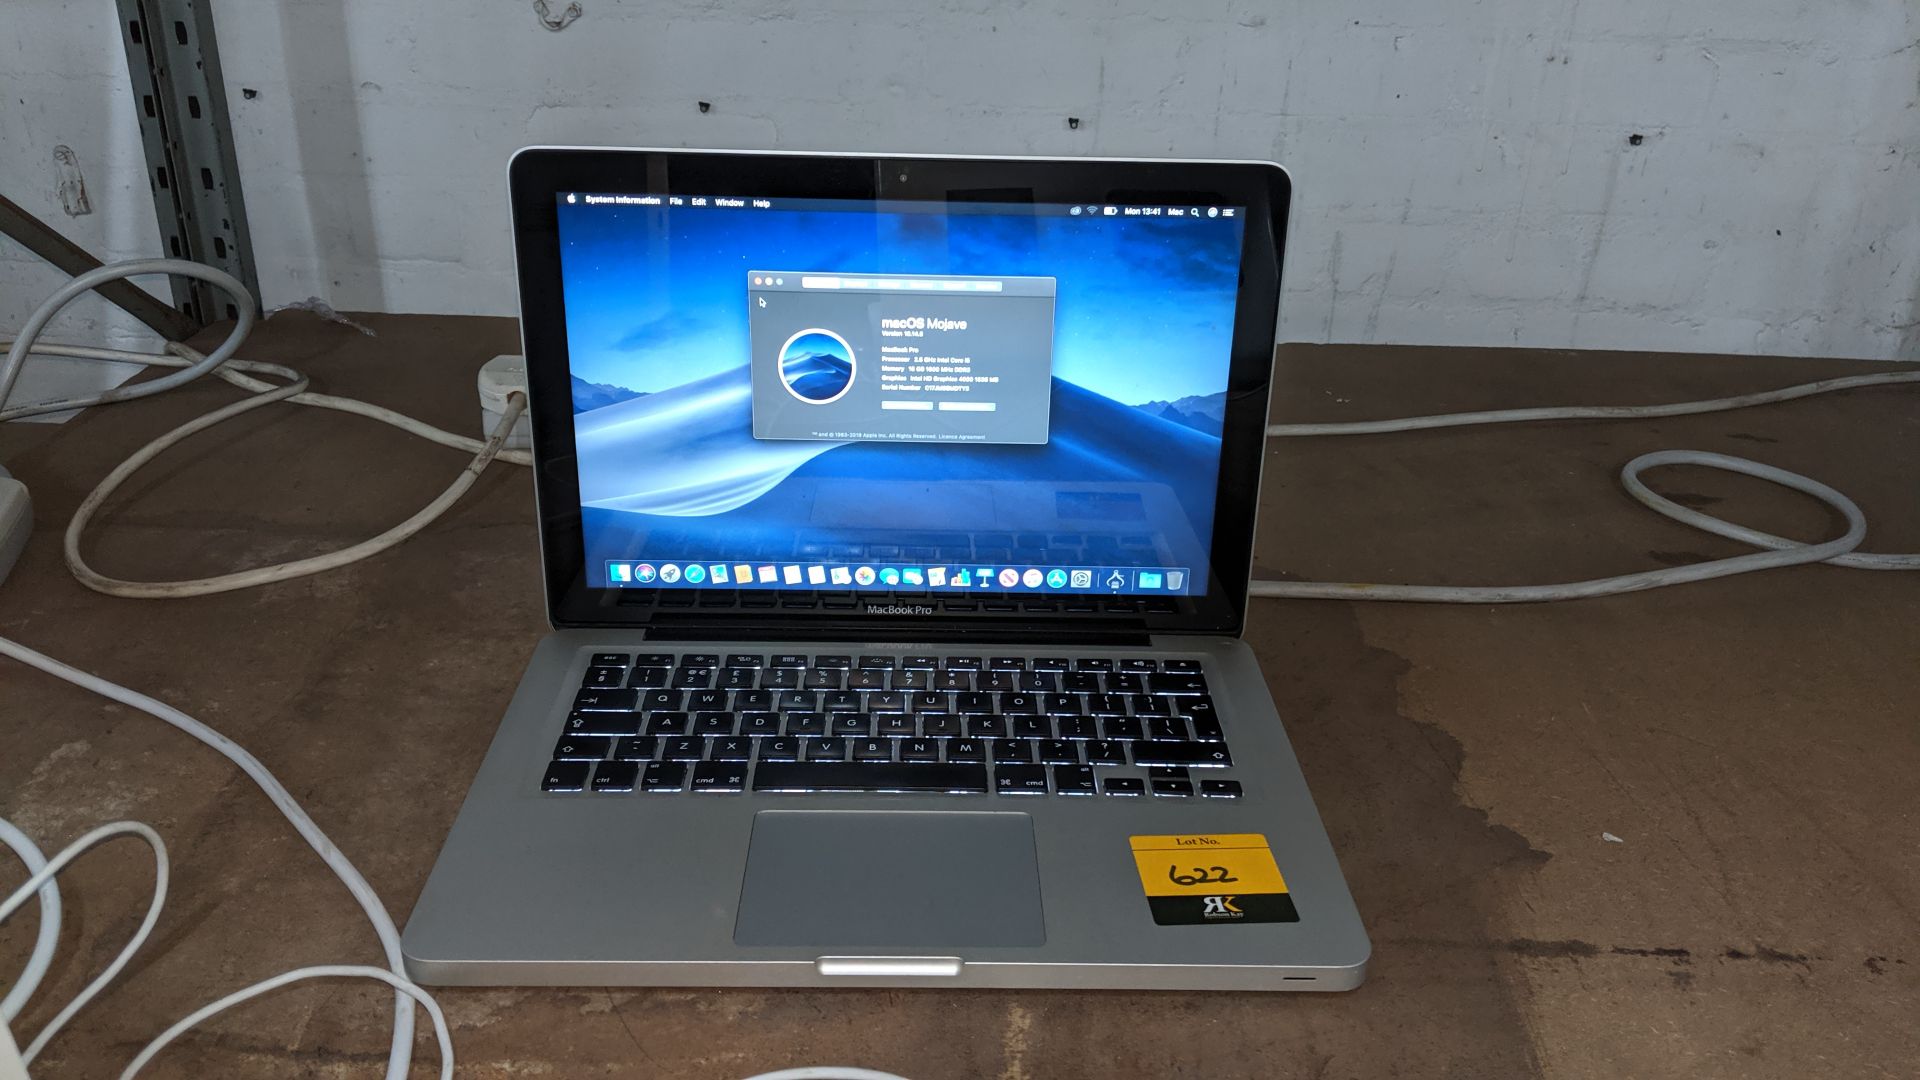 Apple MacBook Pro 9.2 silver notebook computer, Intel Core i5 @ 2.5GHz, 16Gb RAM, 500Gb HDD, 13.